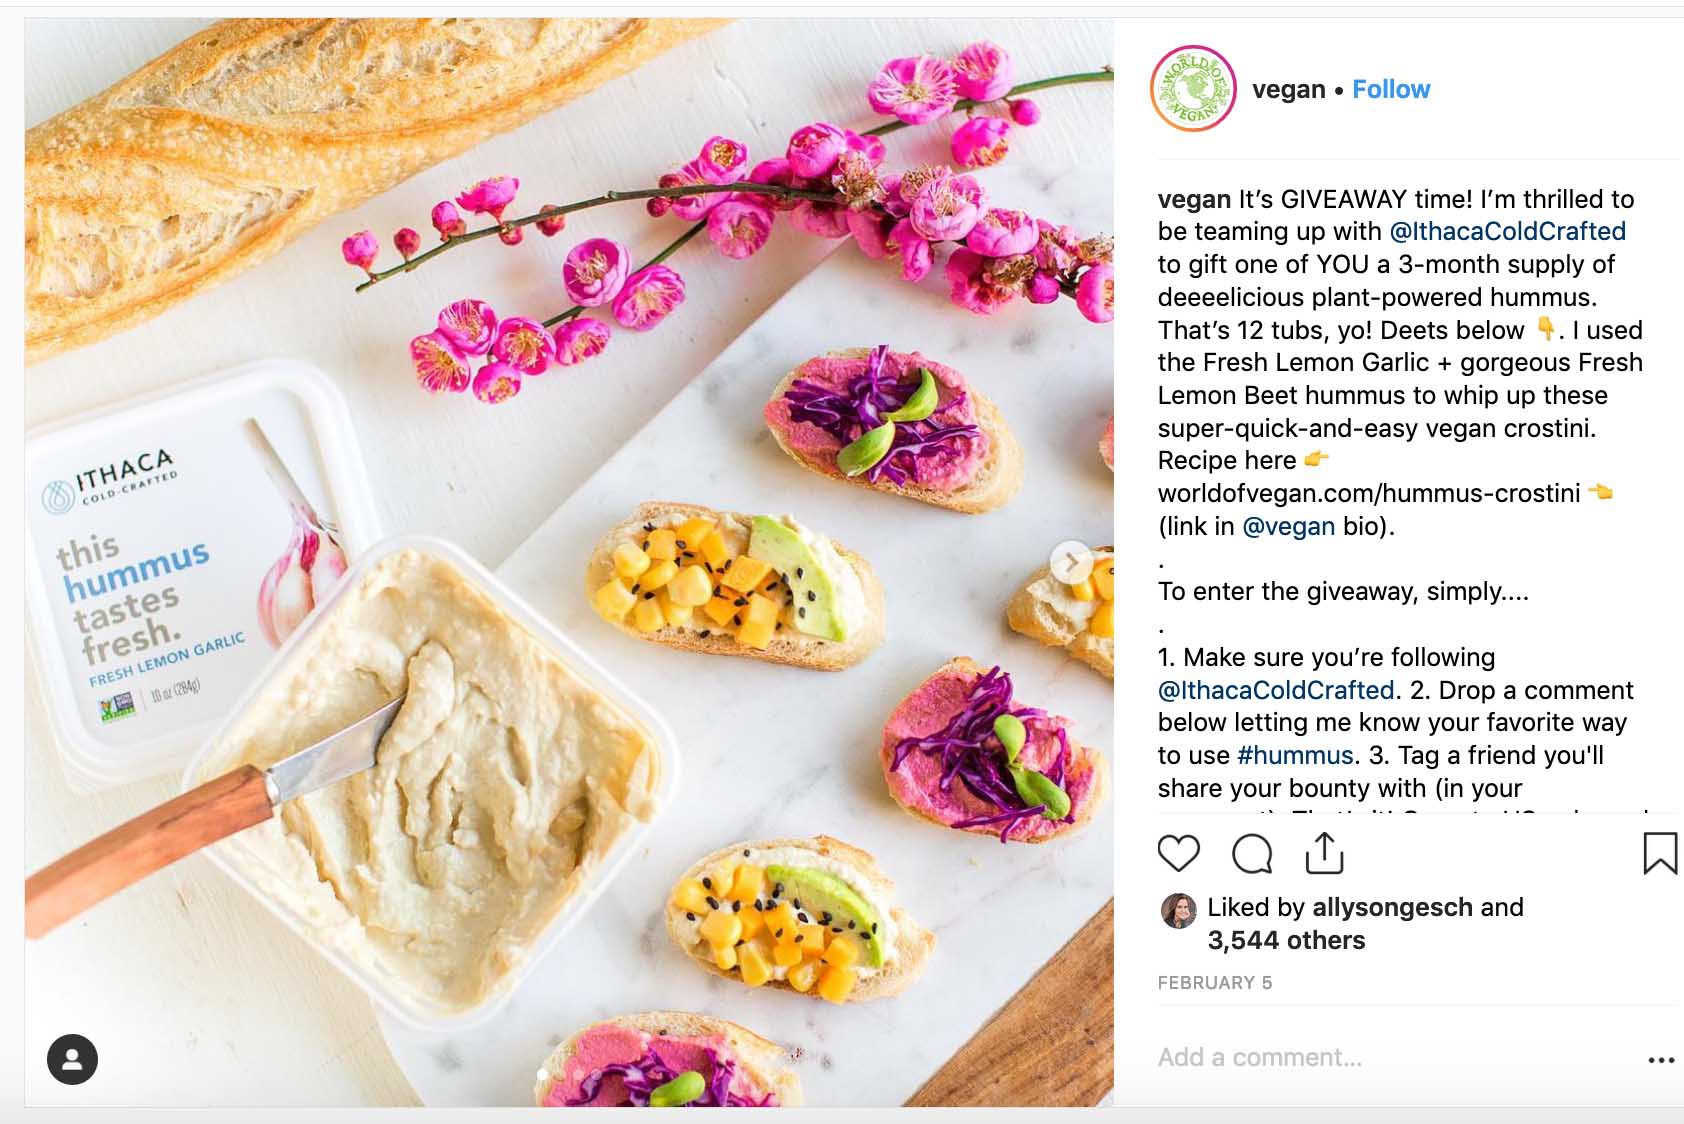 vegan food brands, vegan lifestyle photography, Vegan Food Advertising Trends, vegan food photography, vegan food influencers, vegan style recipes, vegan bloggers, vegan instagram